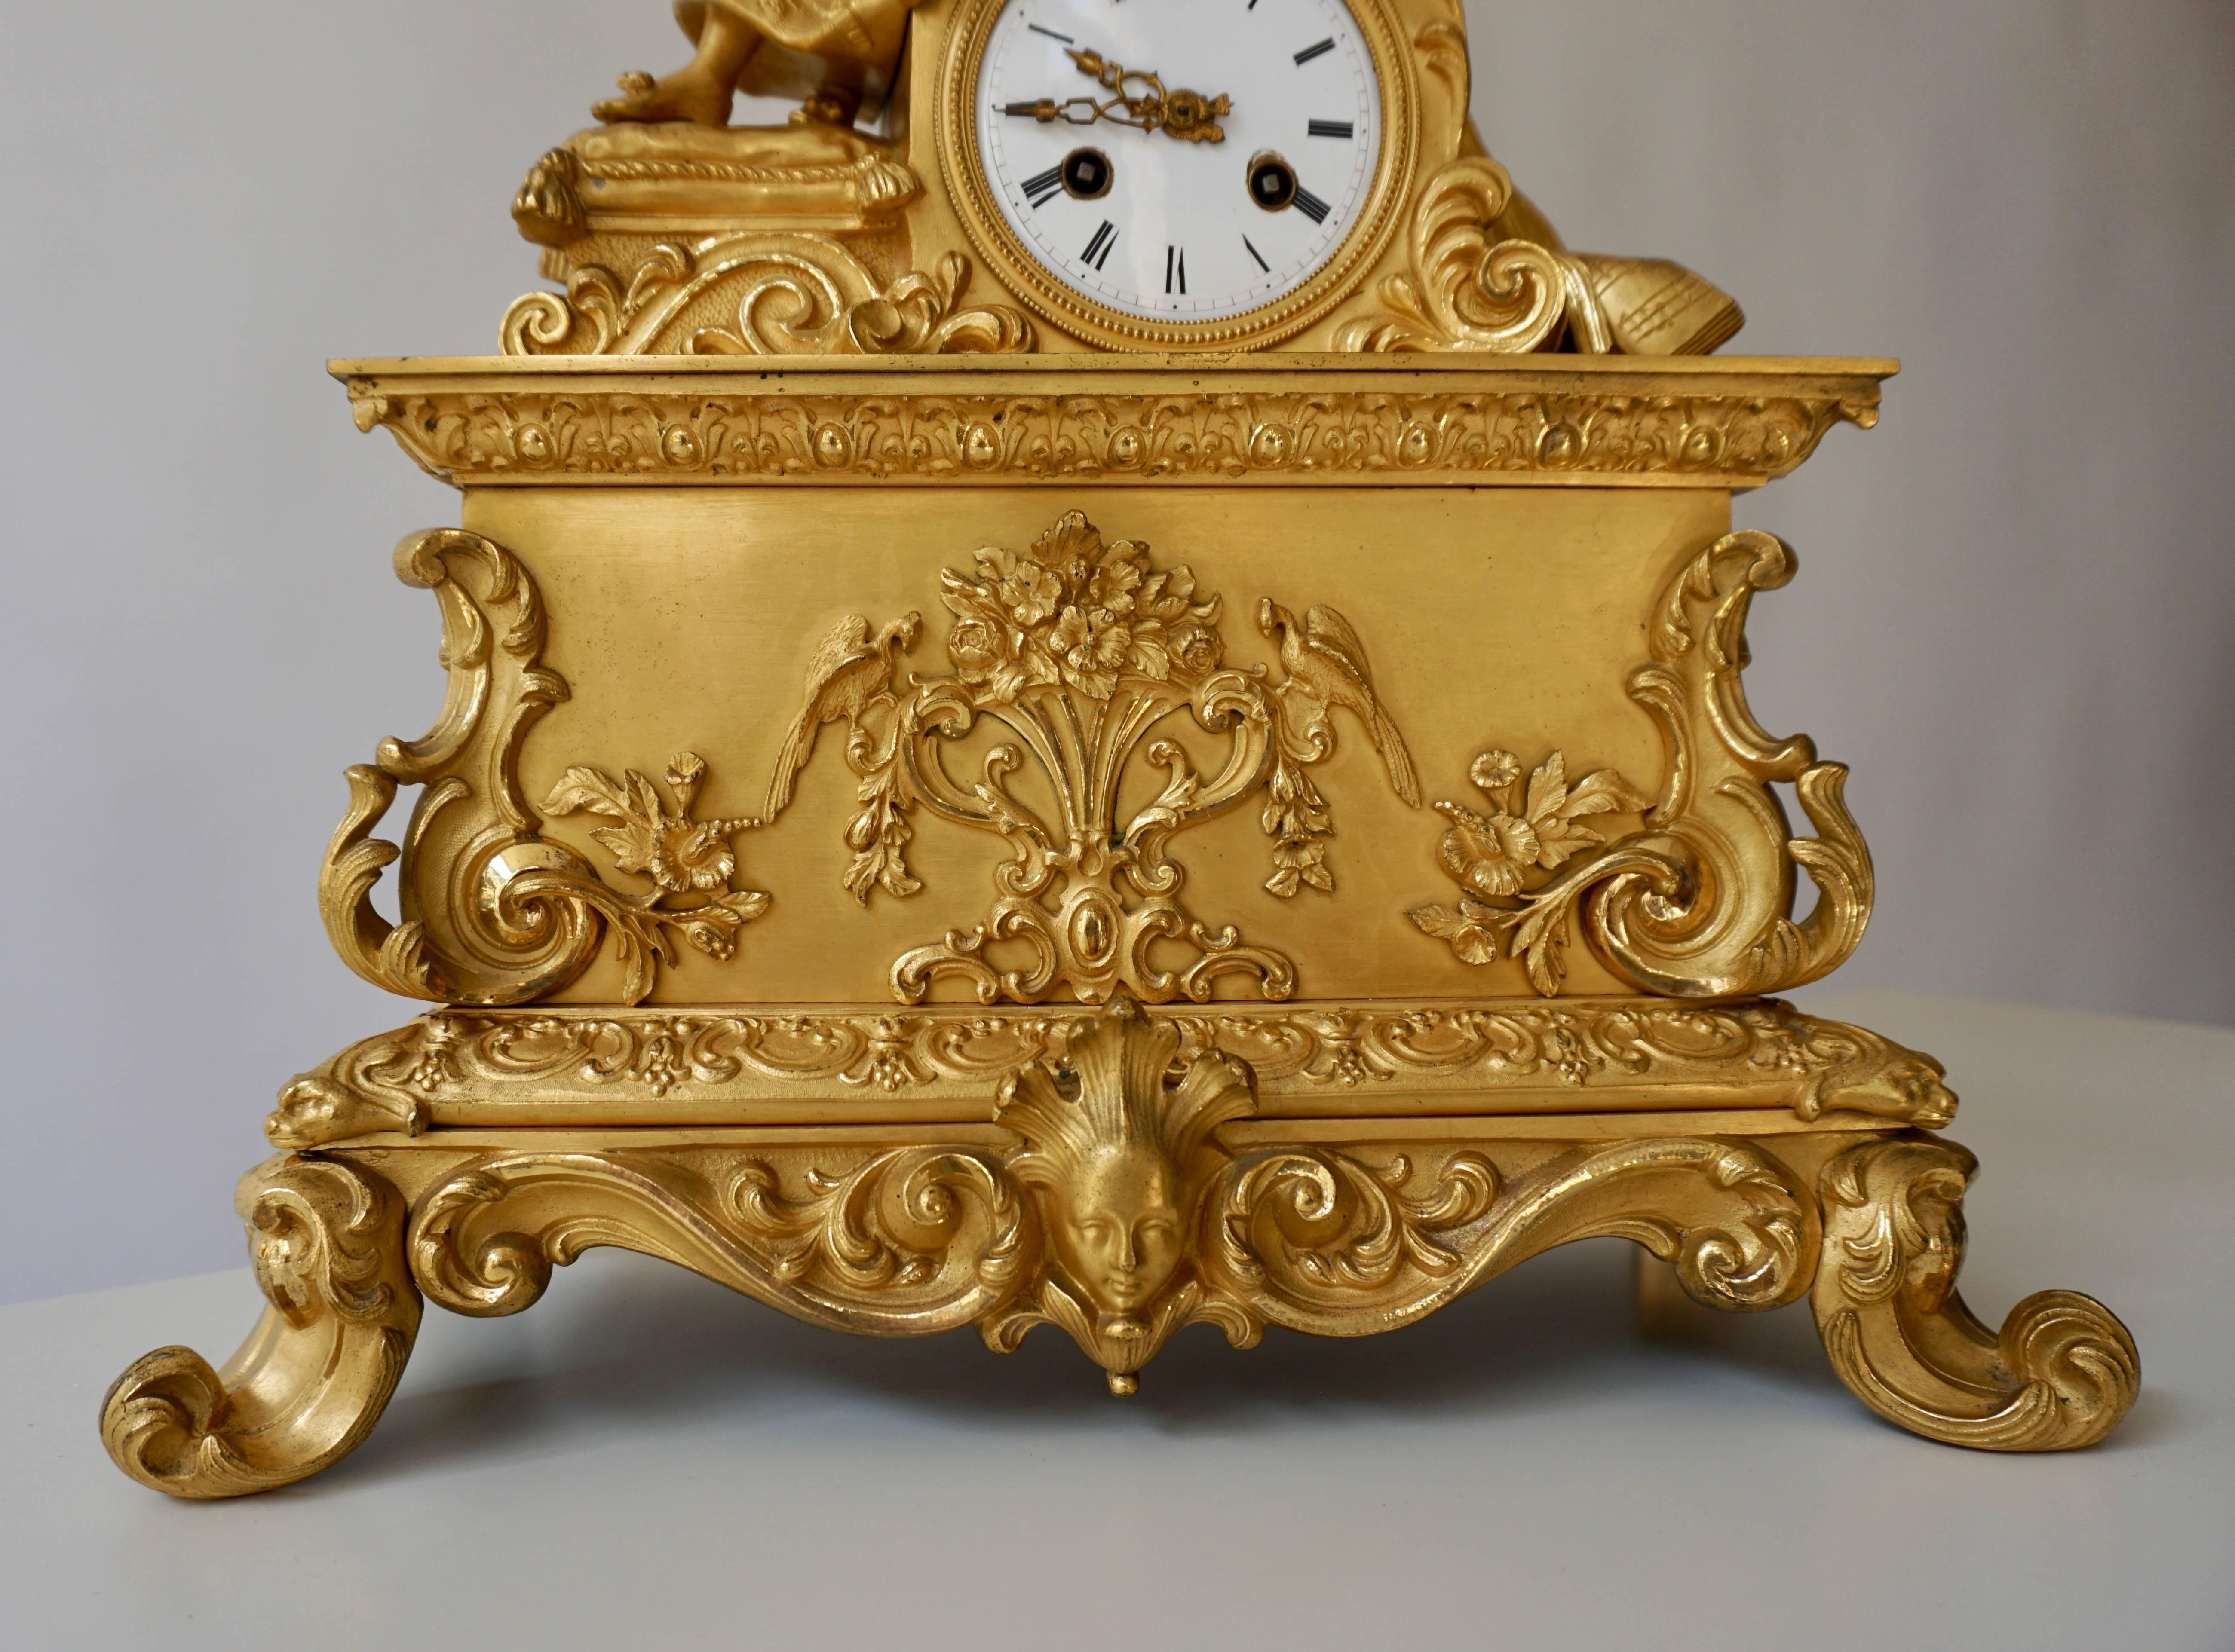 Napoleon III Very Fine and Elegant Fire, Gilt Bronze Mantle Clock in the Romantic Taste